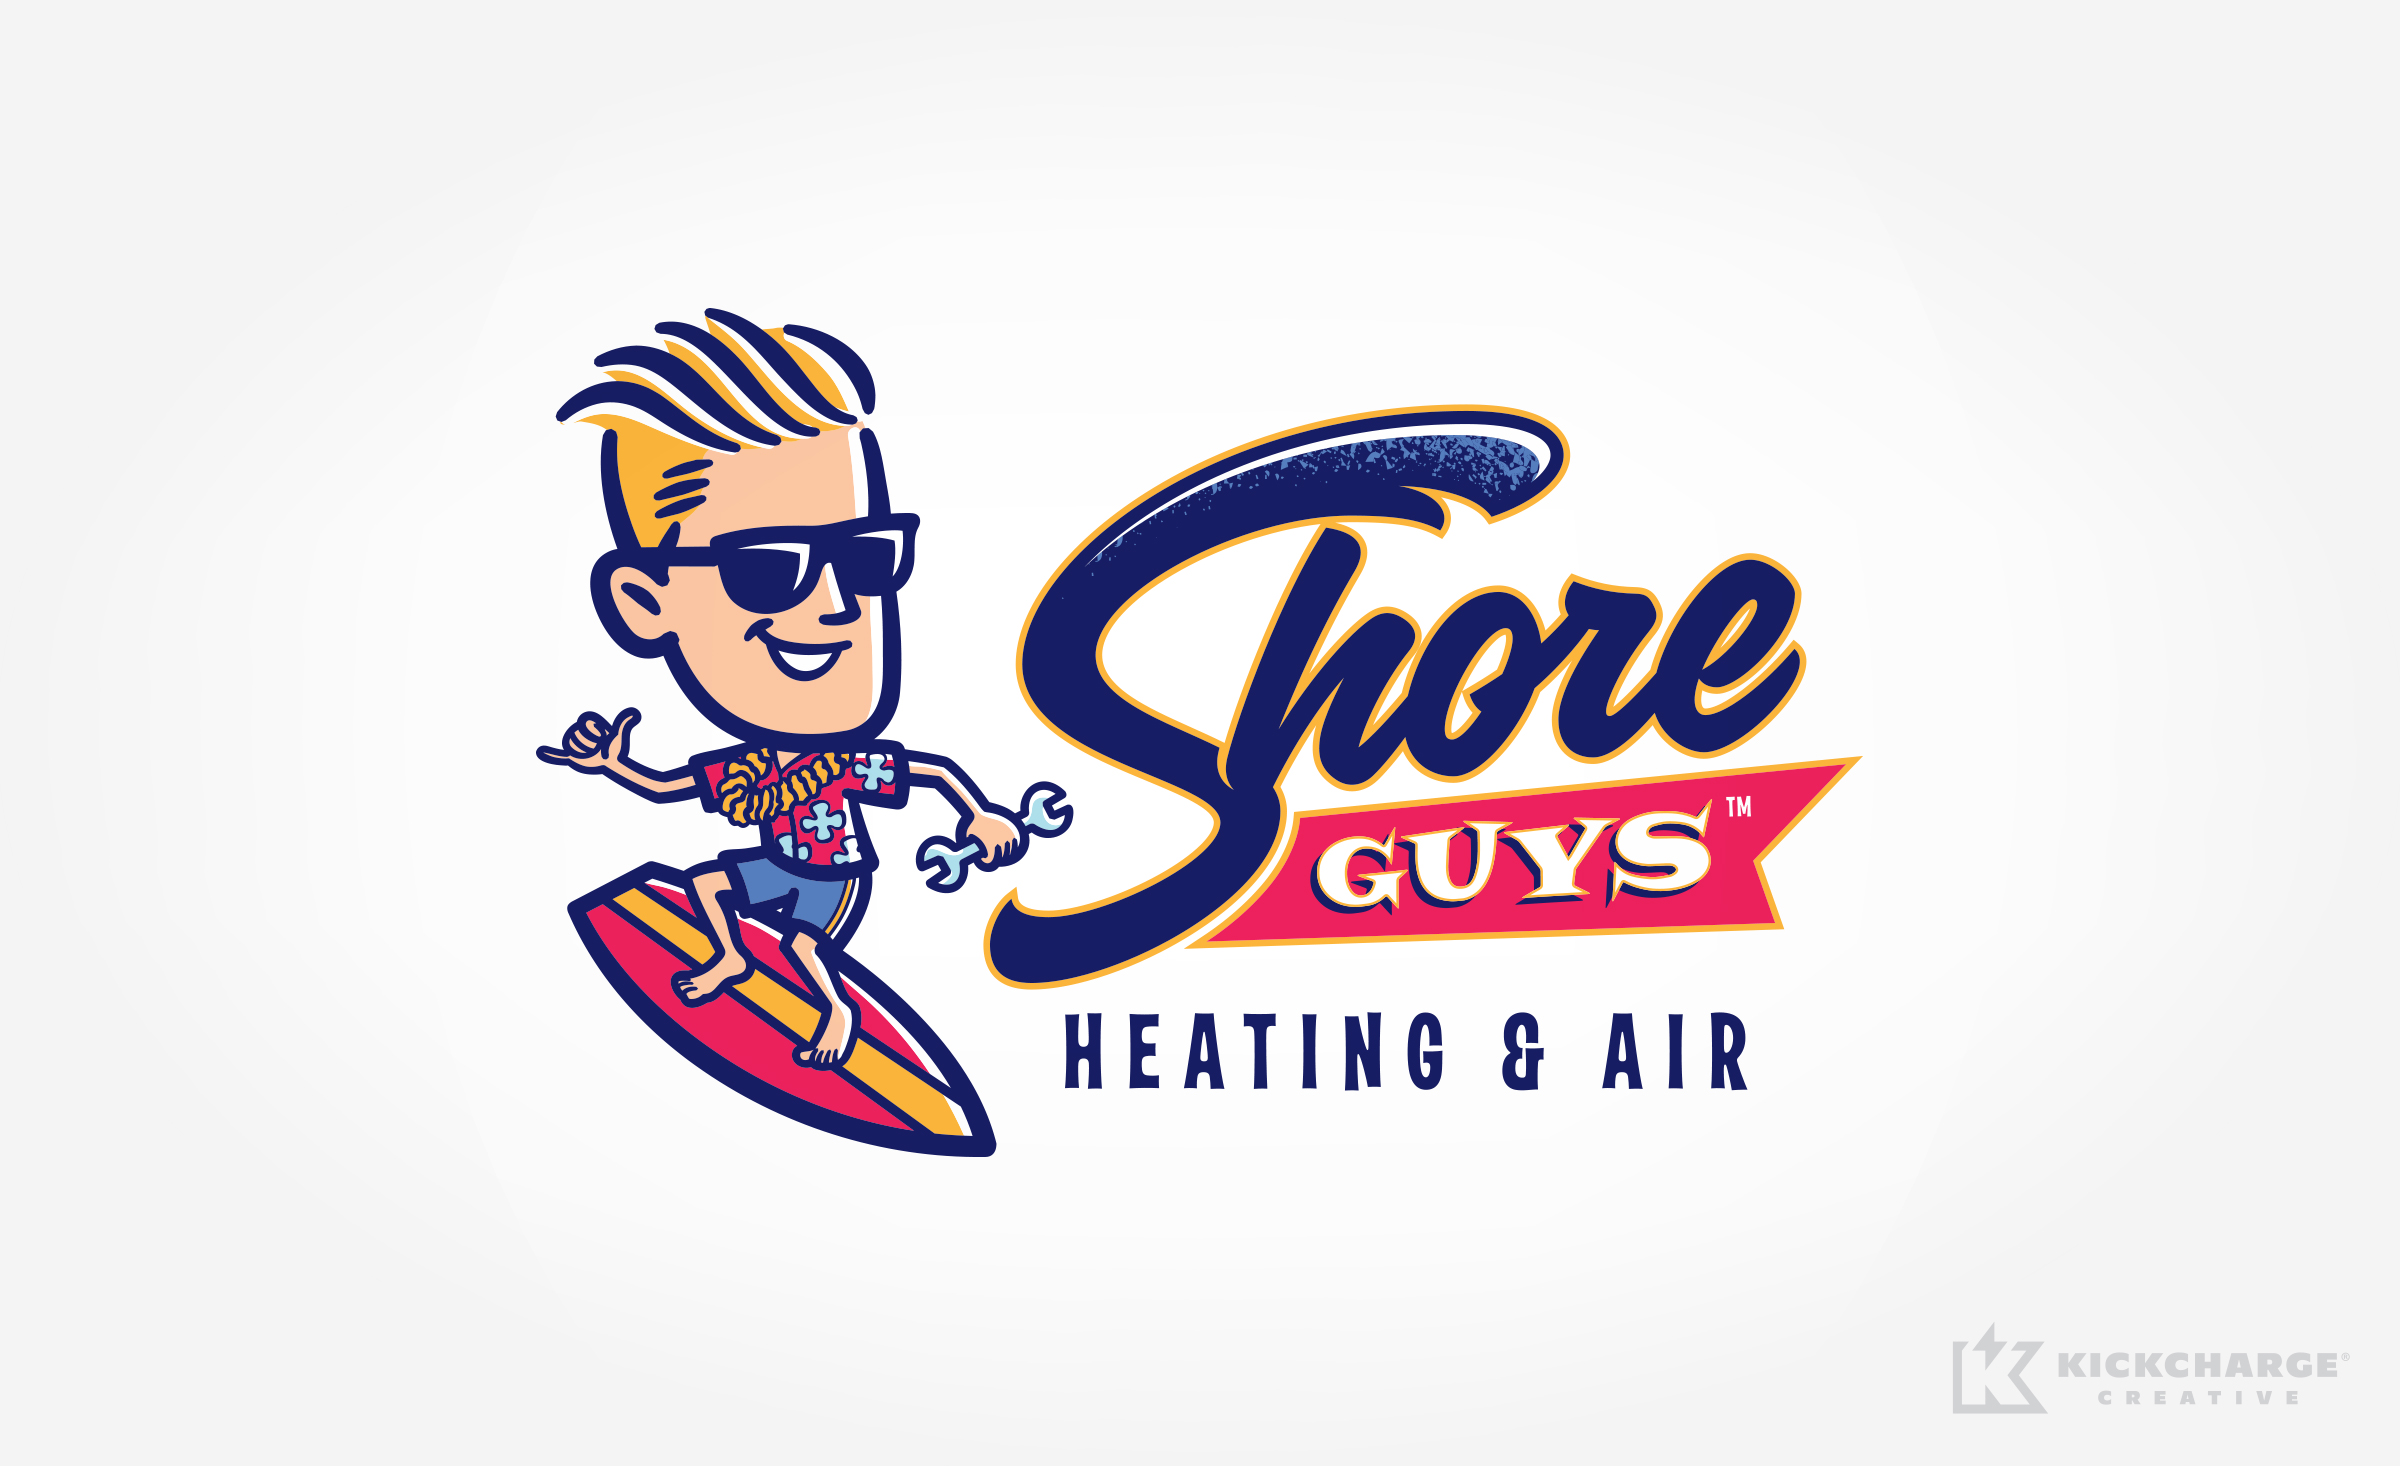 hvac logo for Shore Guys Heating & Air